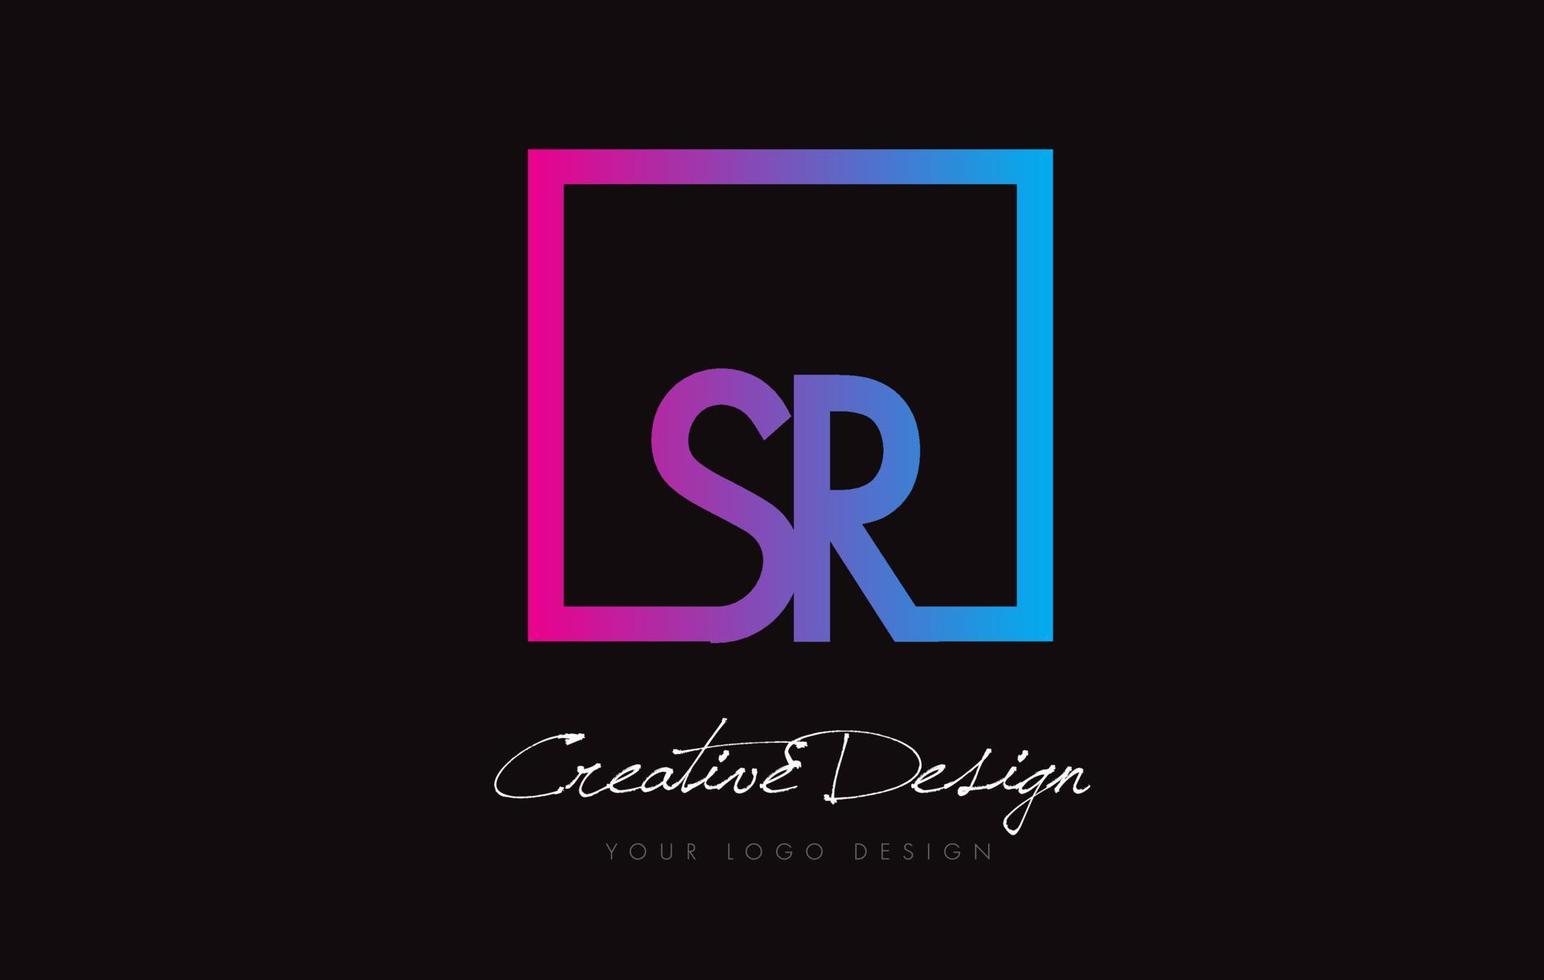 SR Square Frame Letter Logo Design with Purple Blue Colors. vector